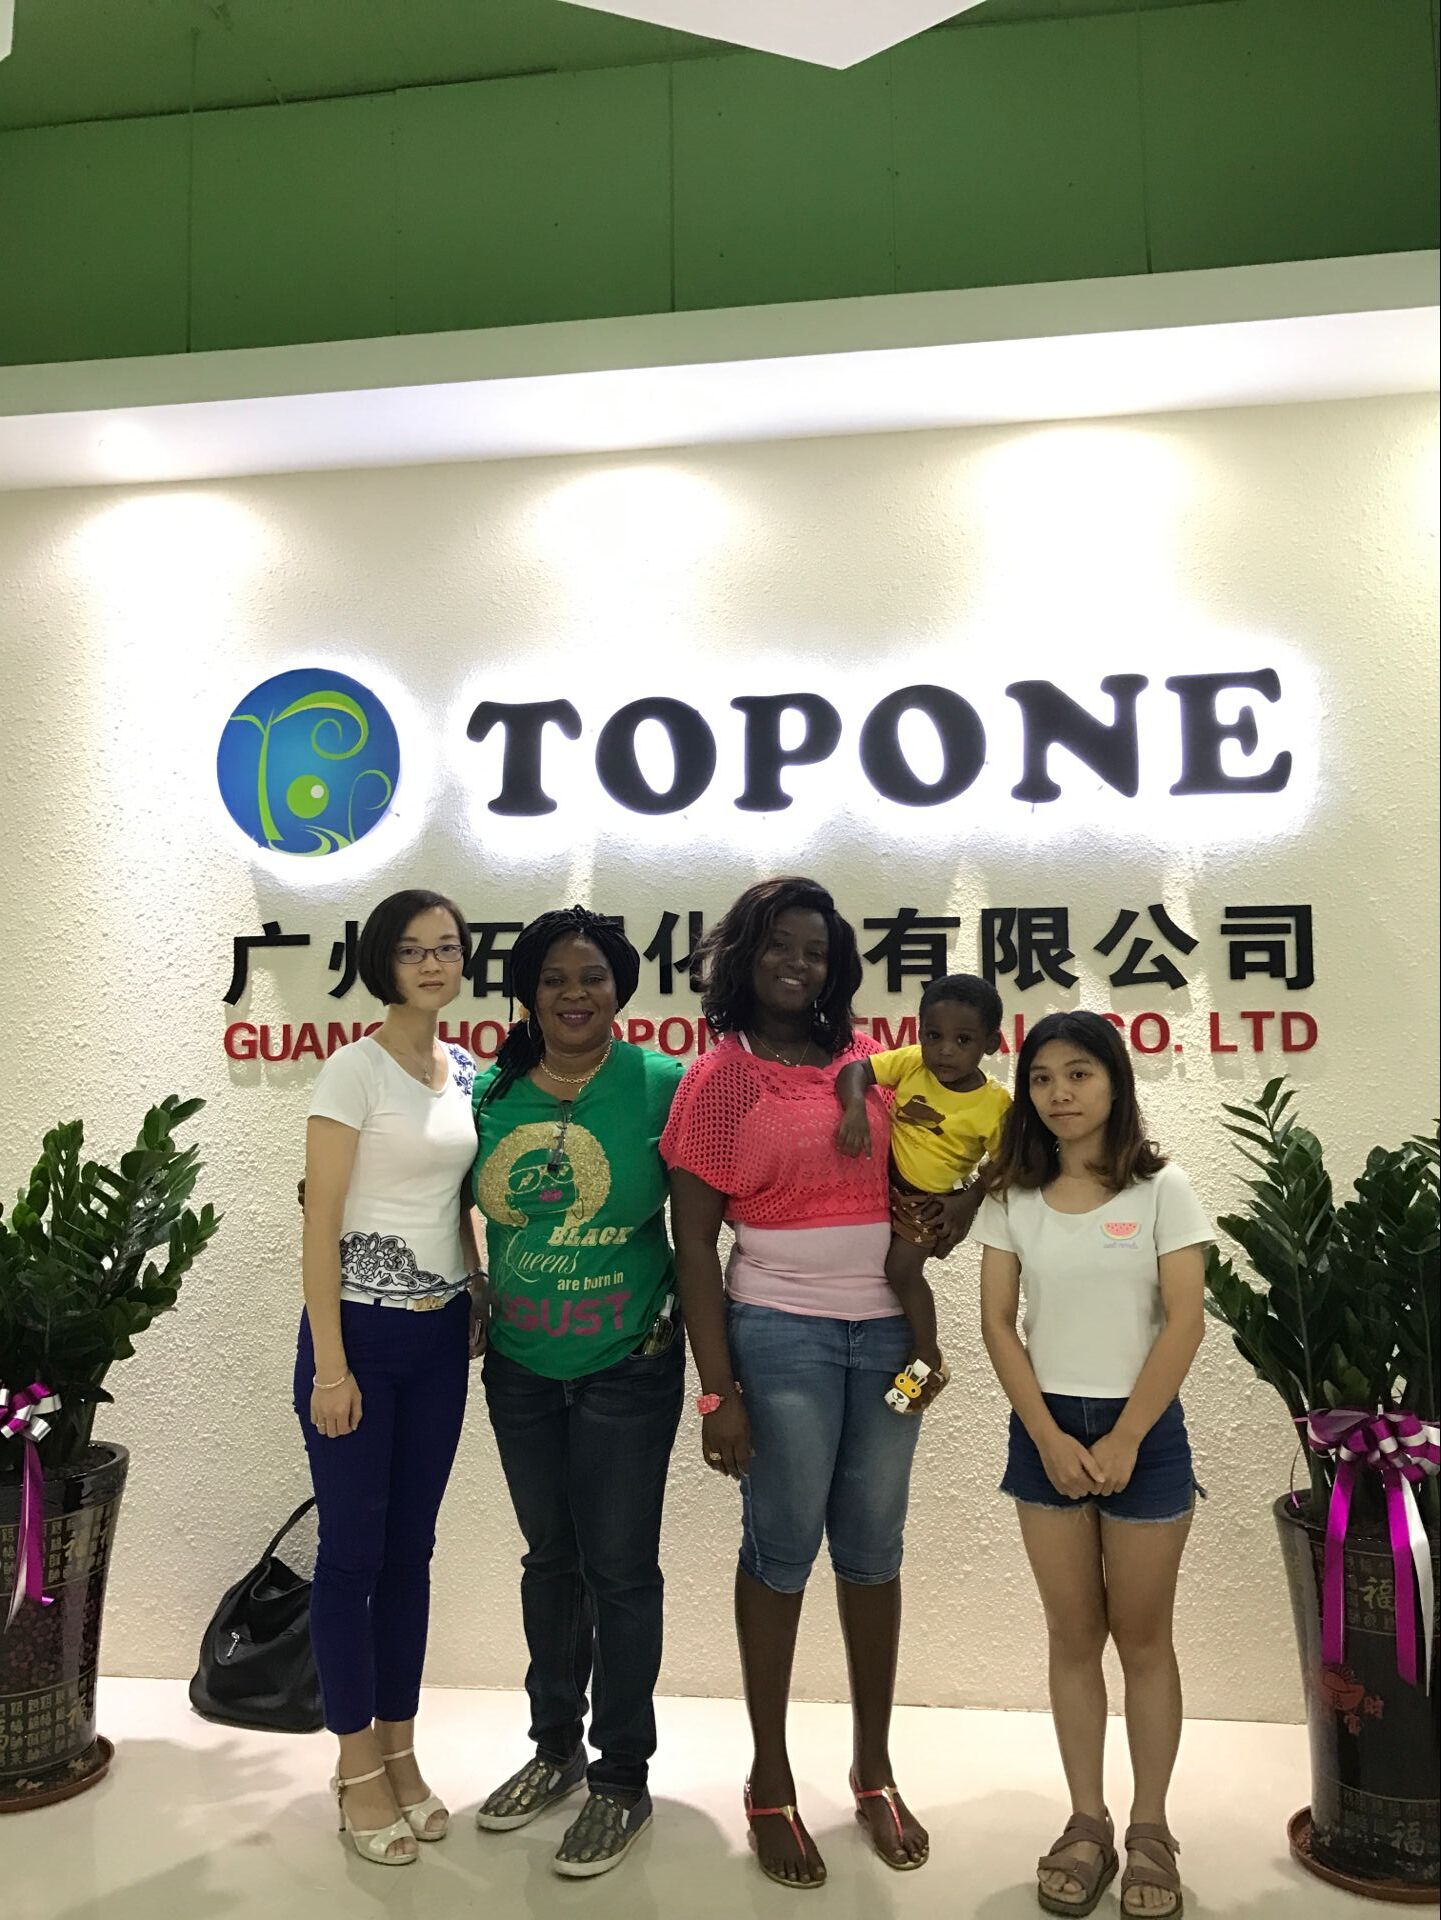 Приветствуем клиентов из Ганы, посетите компанию Topone ---TOPONE NEWS